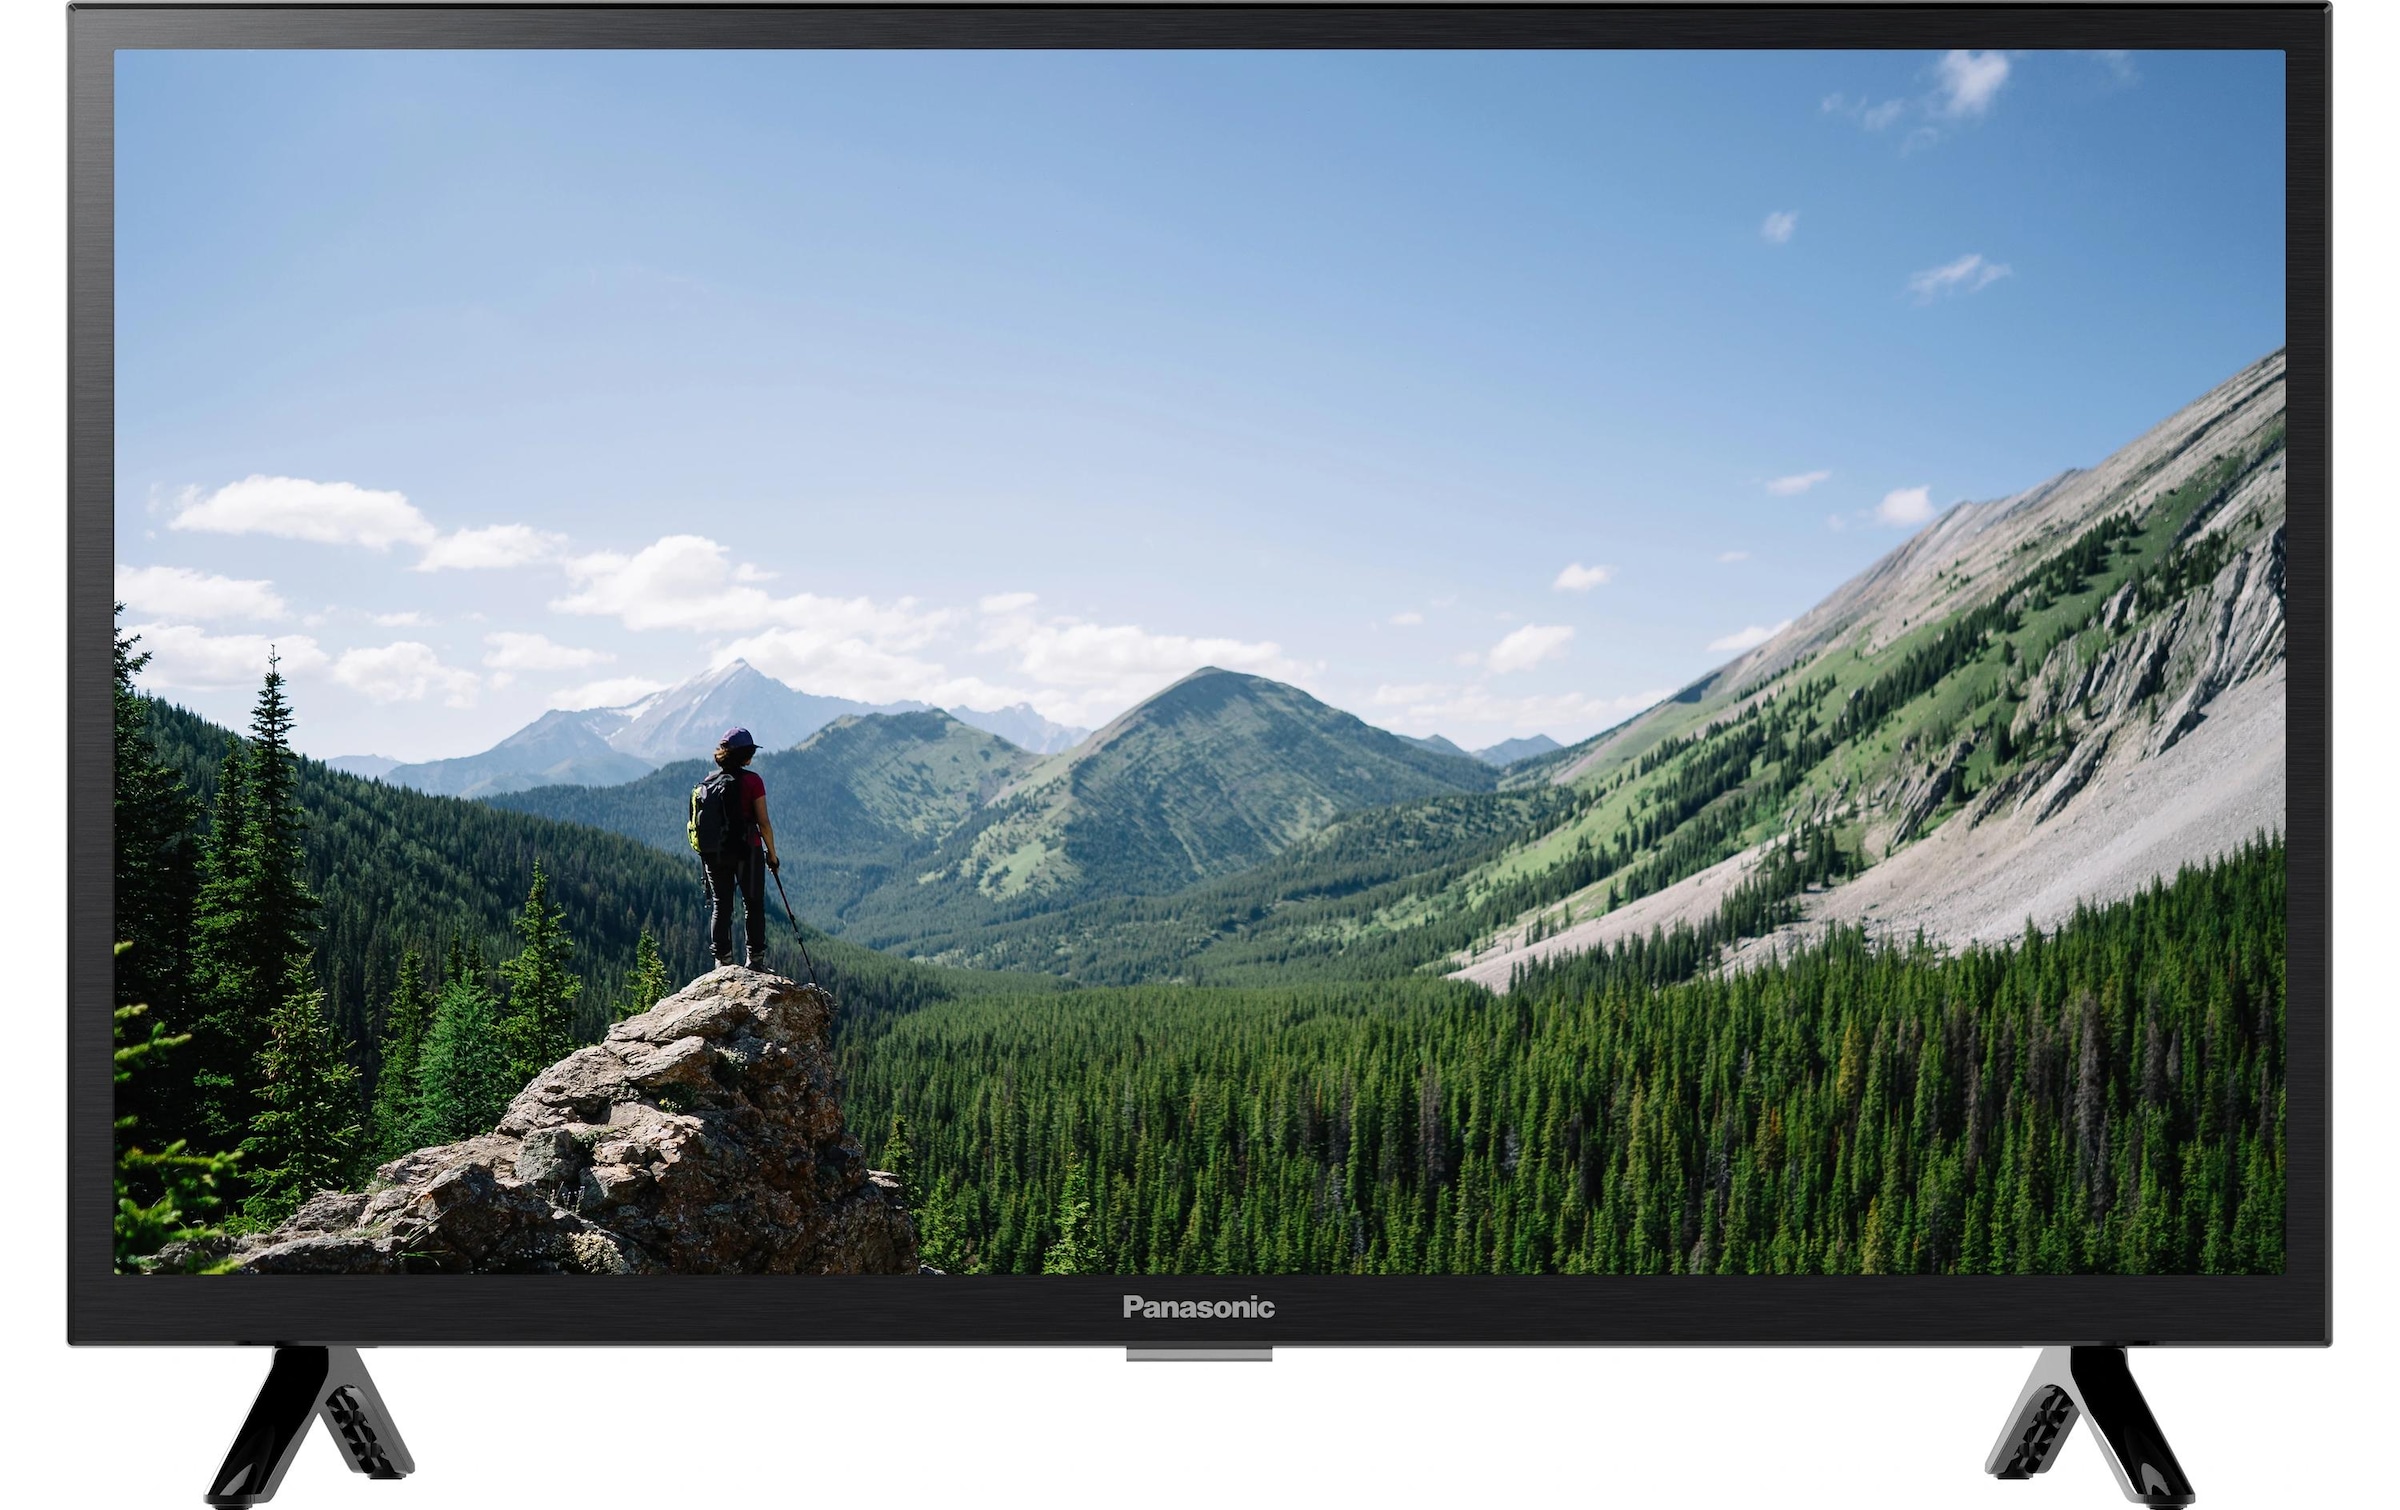 LCD-LED Fernseher »TX-24MSW504 24 1366 x 768 (WXGA), LED-LCD«, 60 cm/24 Zoll, WXGA,...